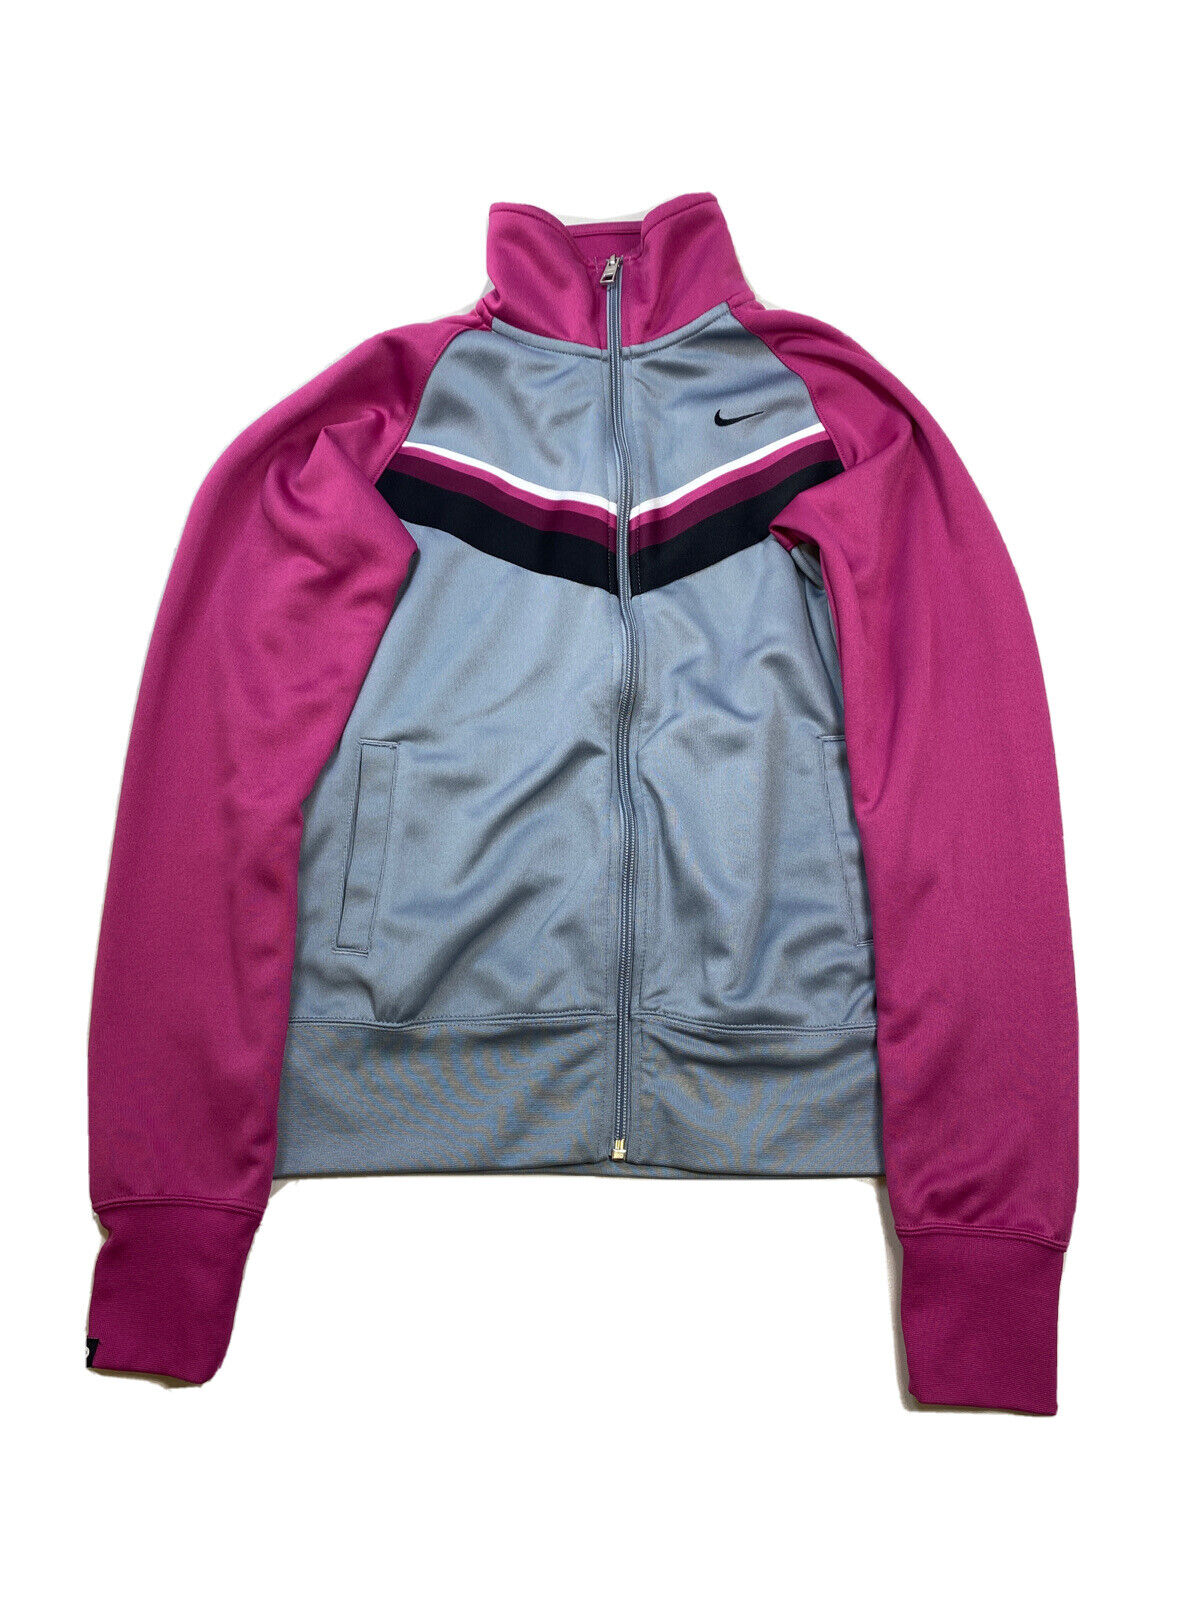 Nike Athletic Dept Girls Youth Kids Gray/pink Full Zip Athletic Jacket M